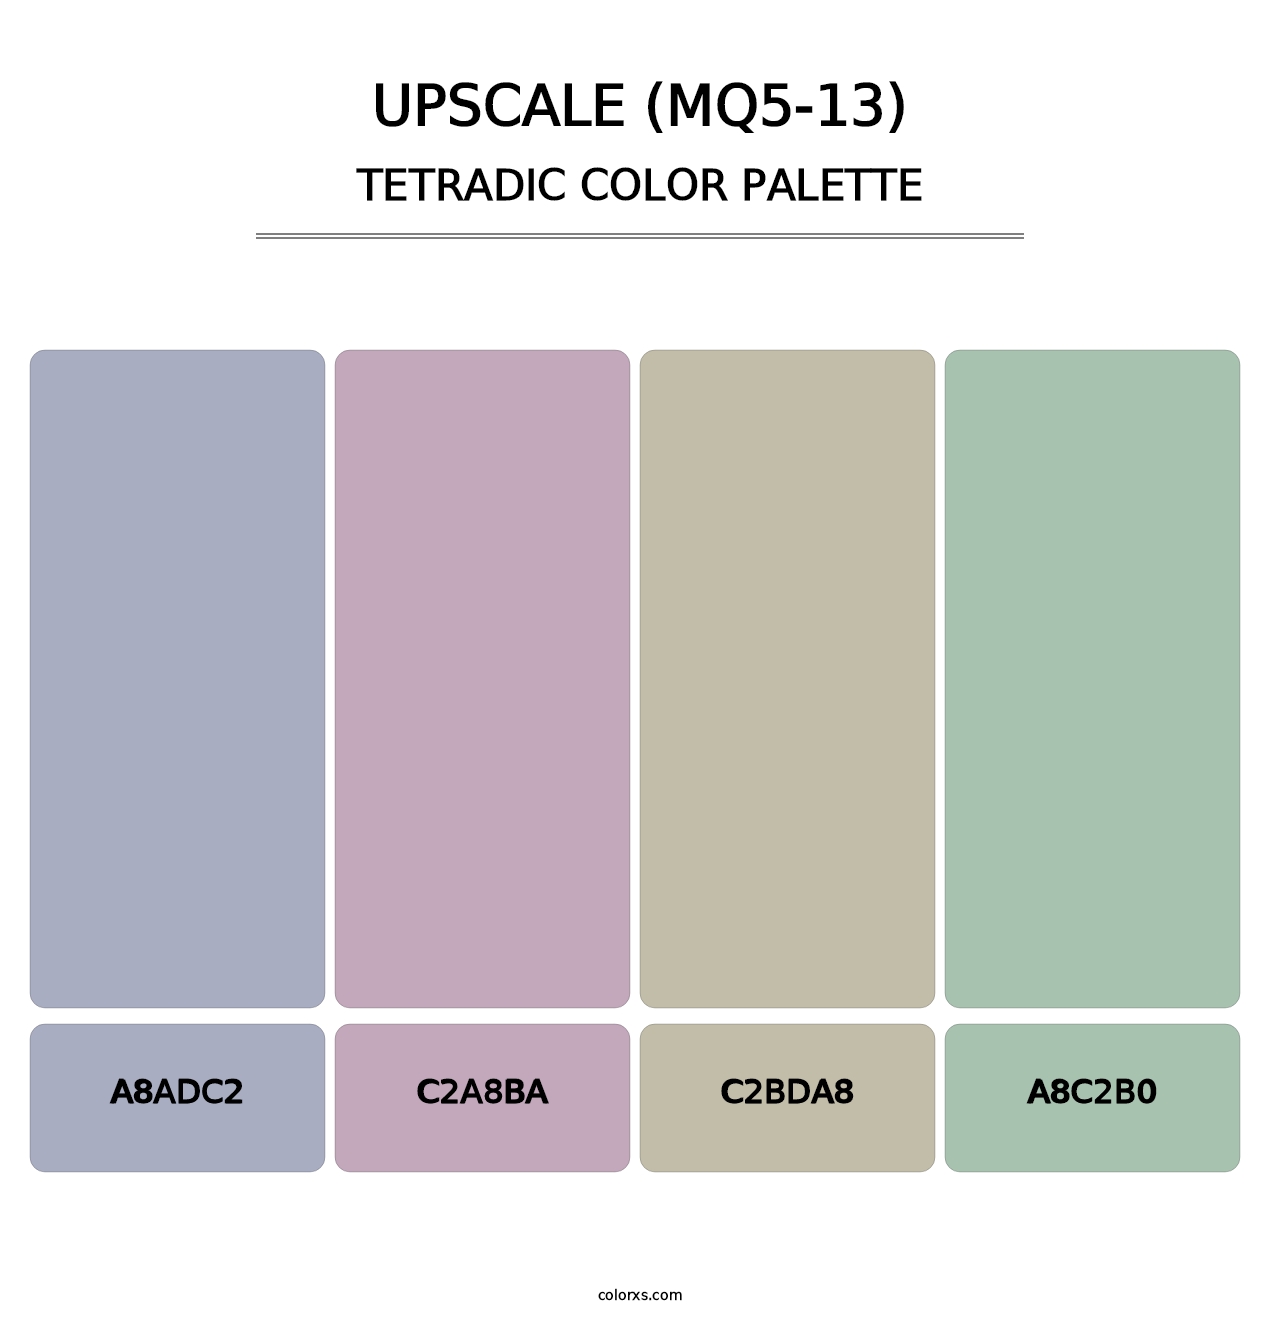 Upscale (MQ5-13) - Tetradic Color Palette